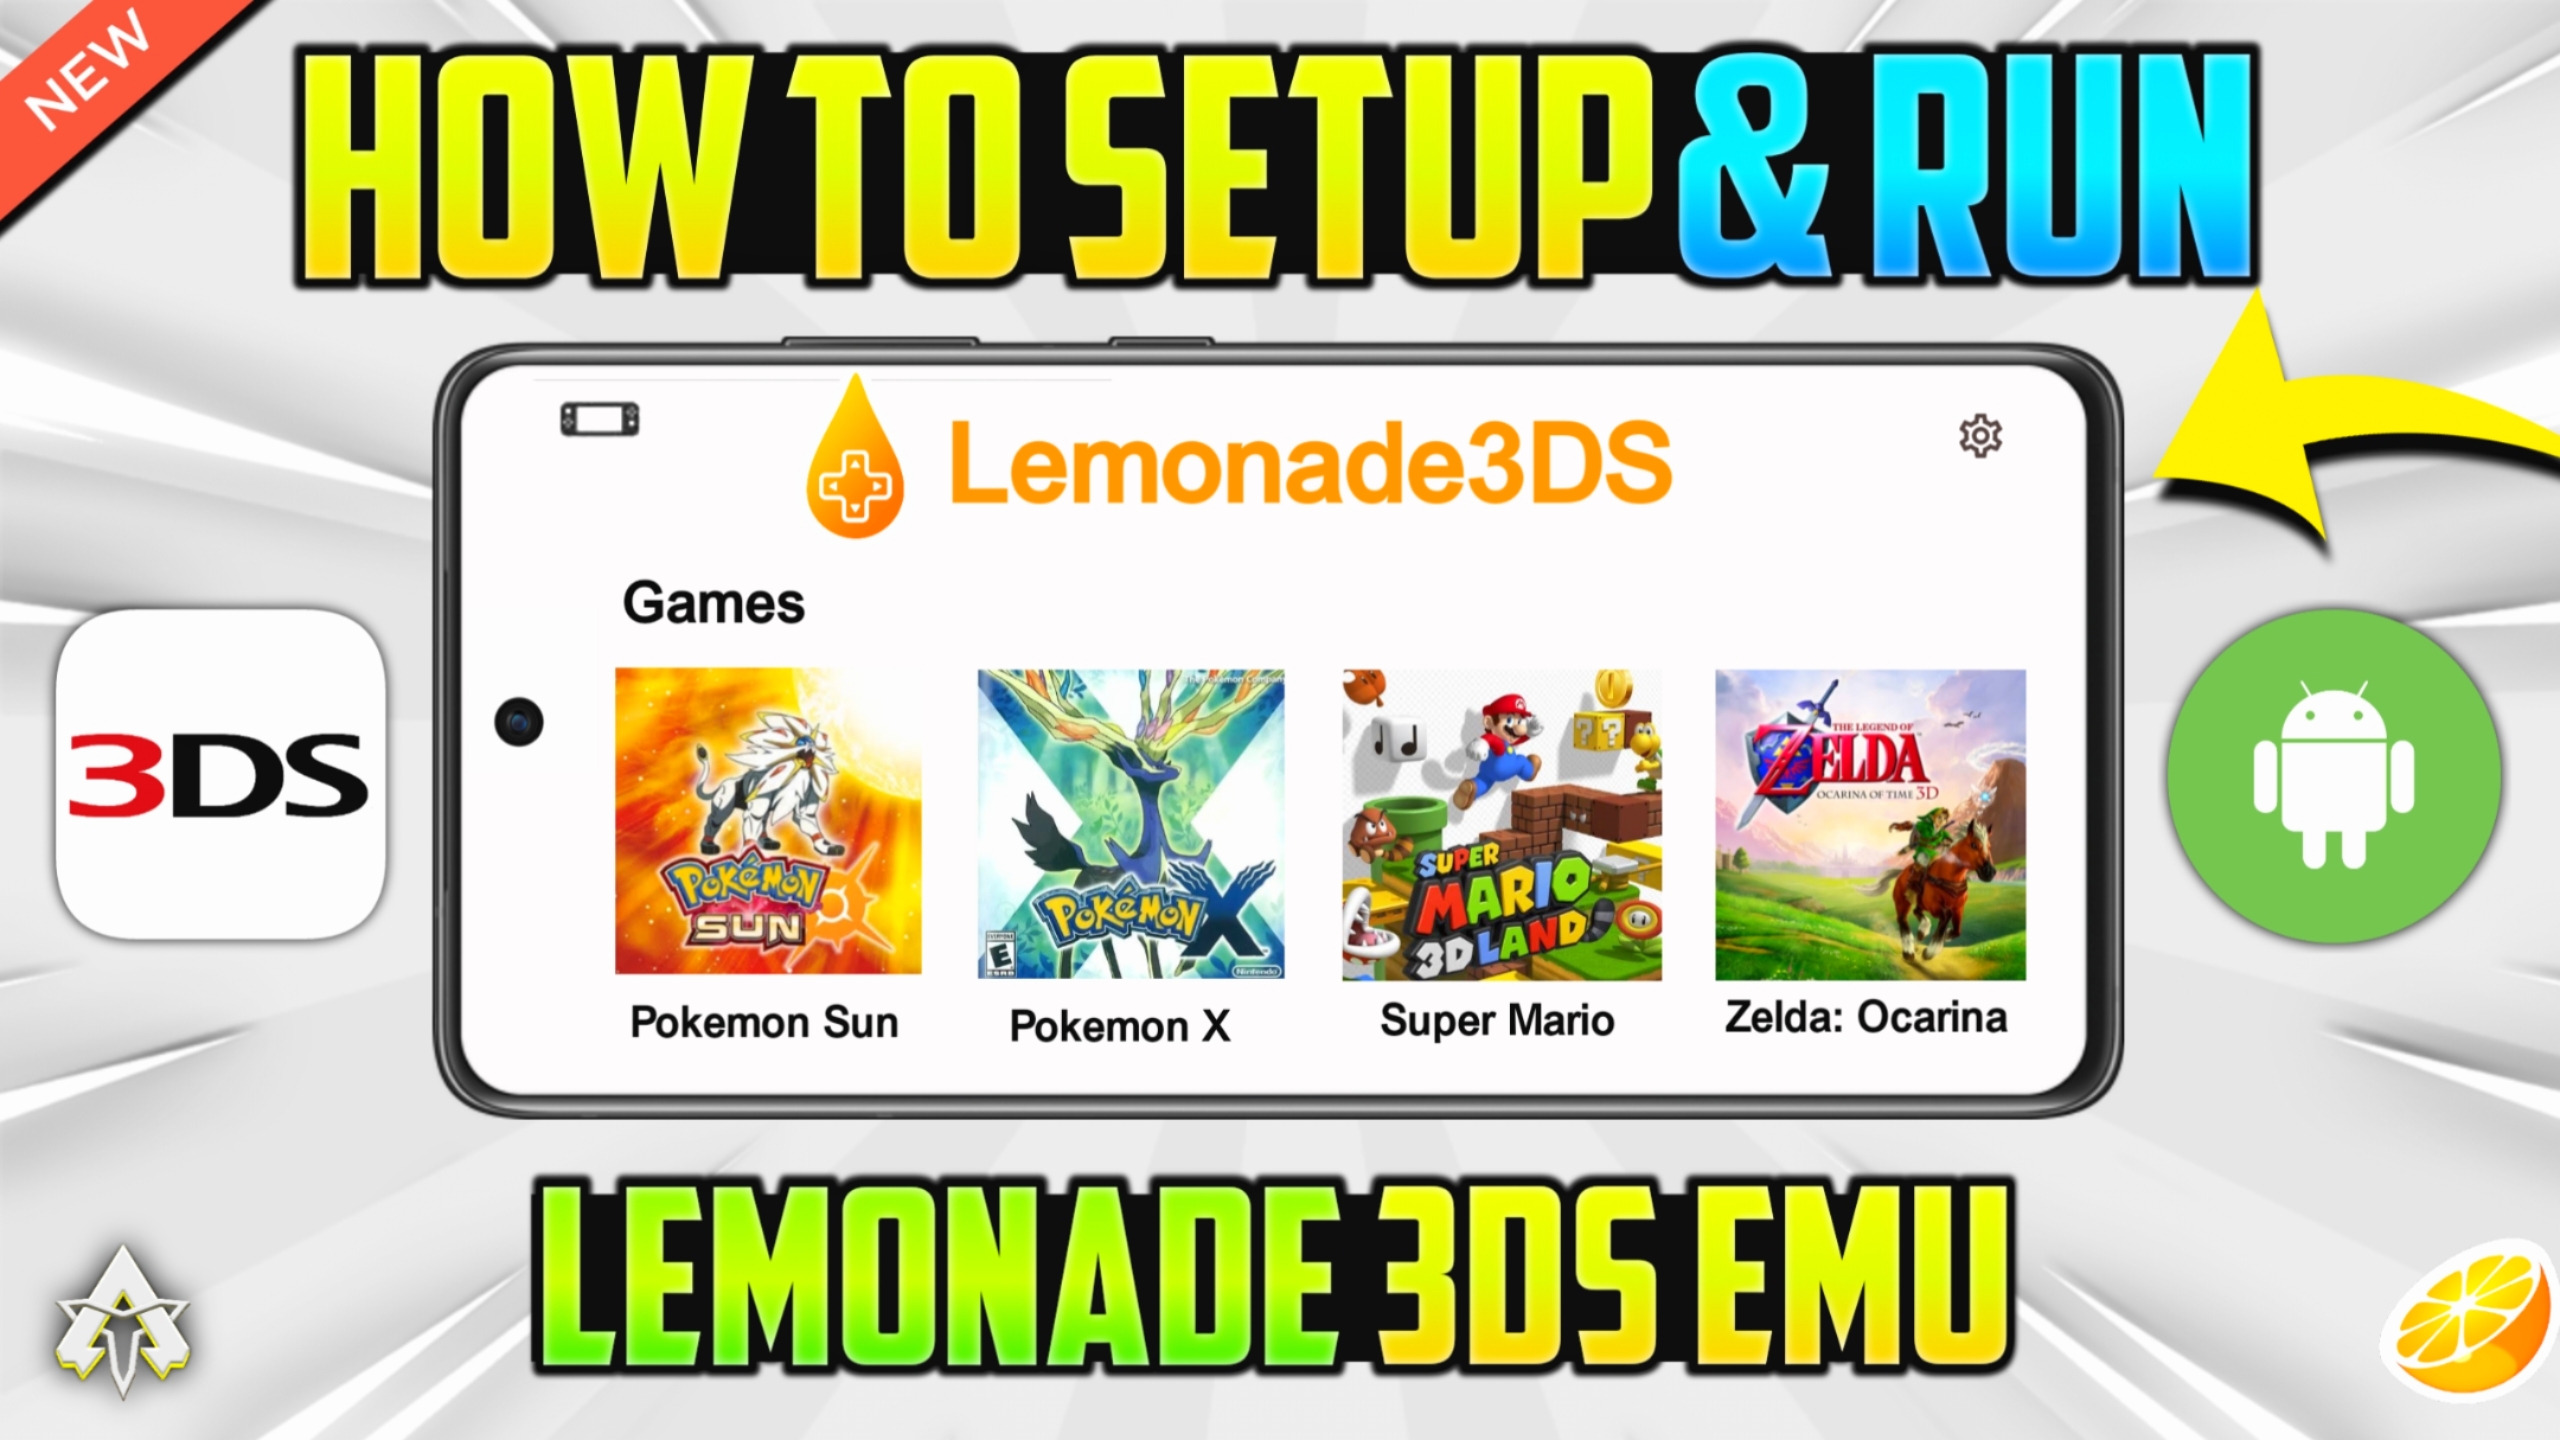 Lemonade 3DS Emulator Android Download & Setup | Full Turorial